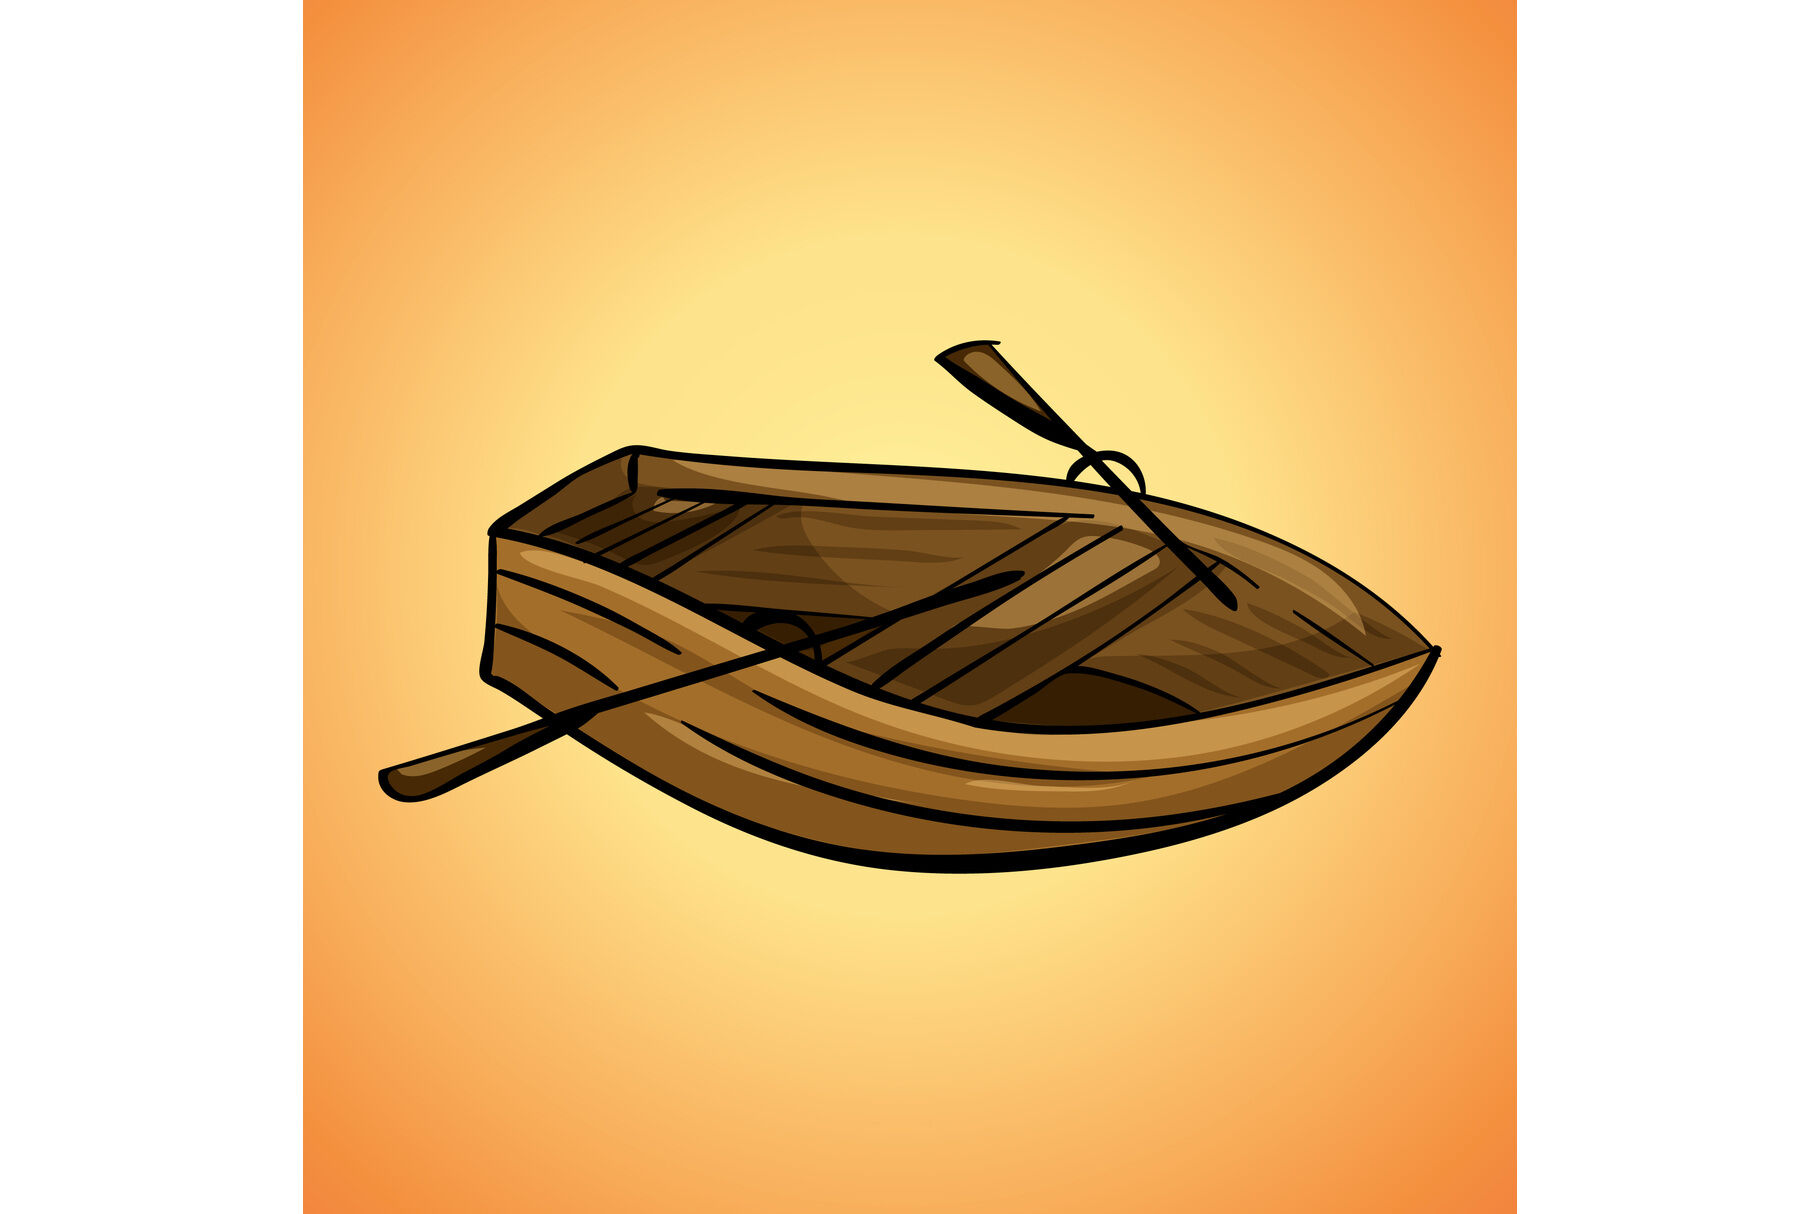 Wood boat icon, cartoon style By Anatolir56